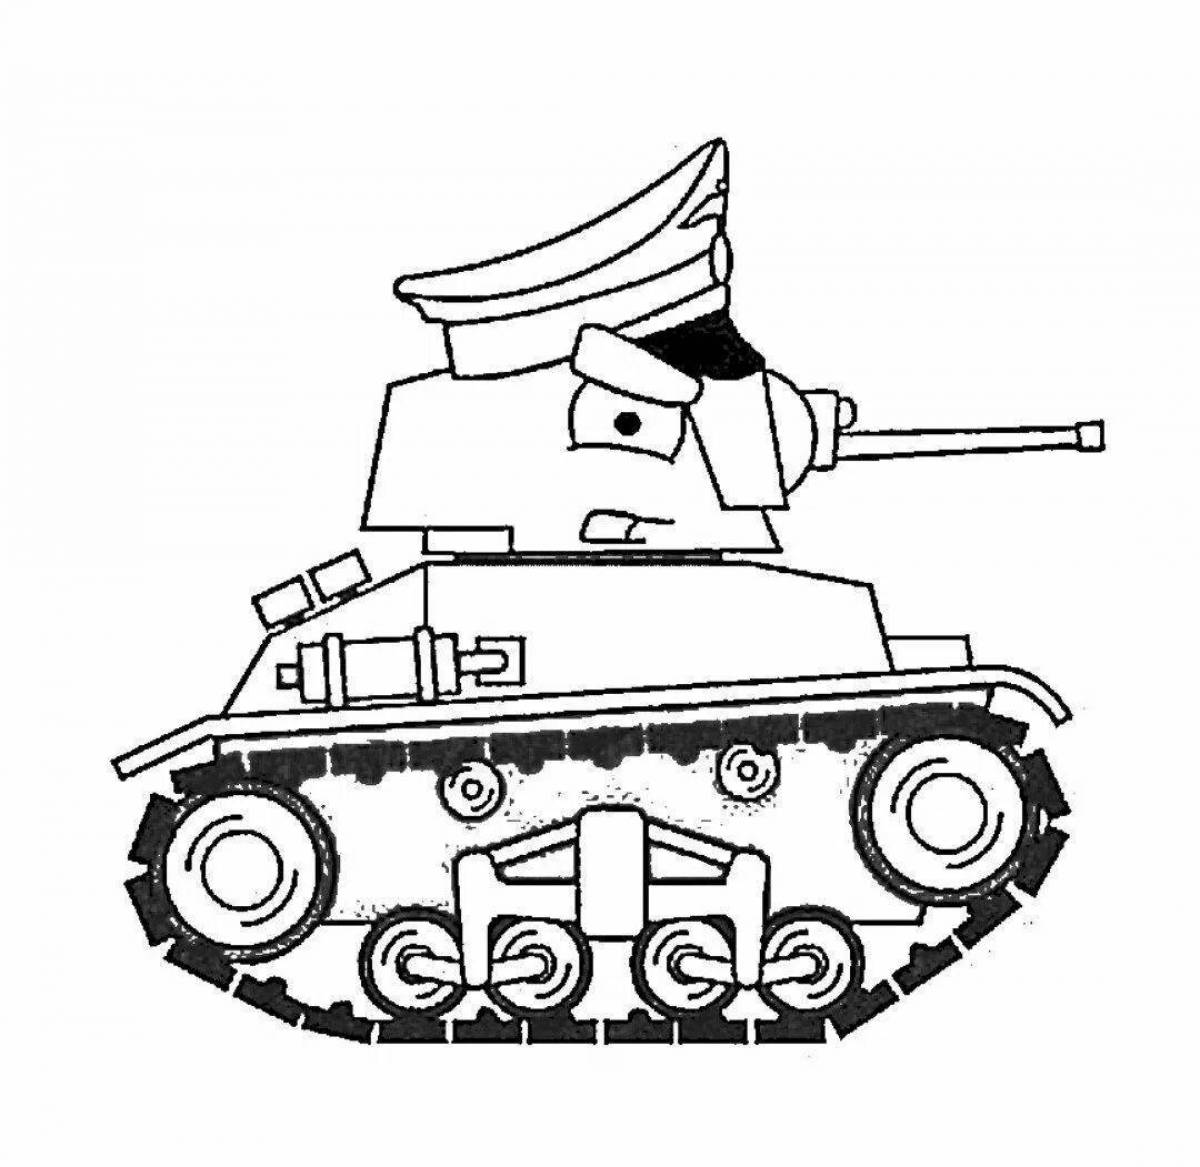 Attractive tank ms 1 coloring book